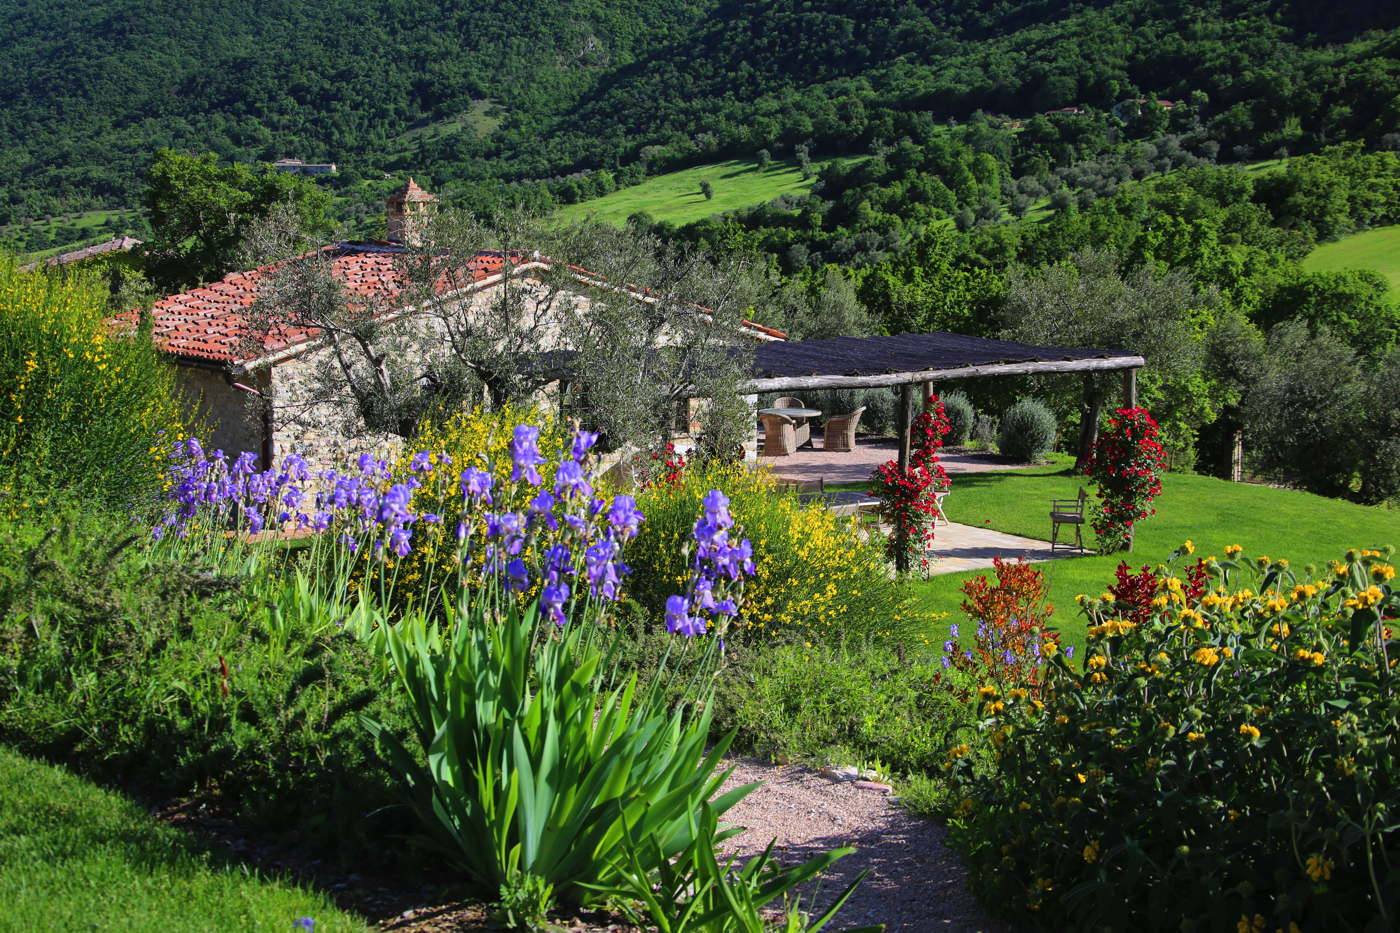 luxury villa-luxury holiday home-vacation villa in Italy-Umbria-San Savino di Murlo